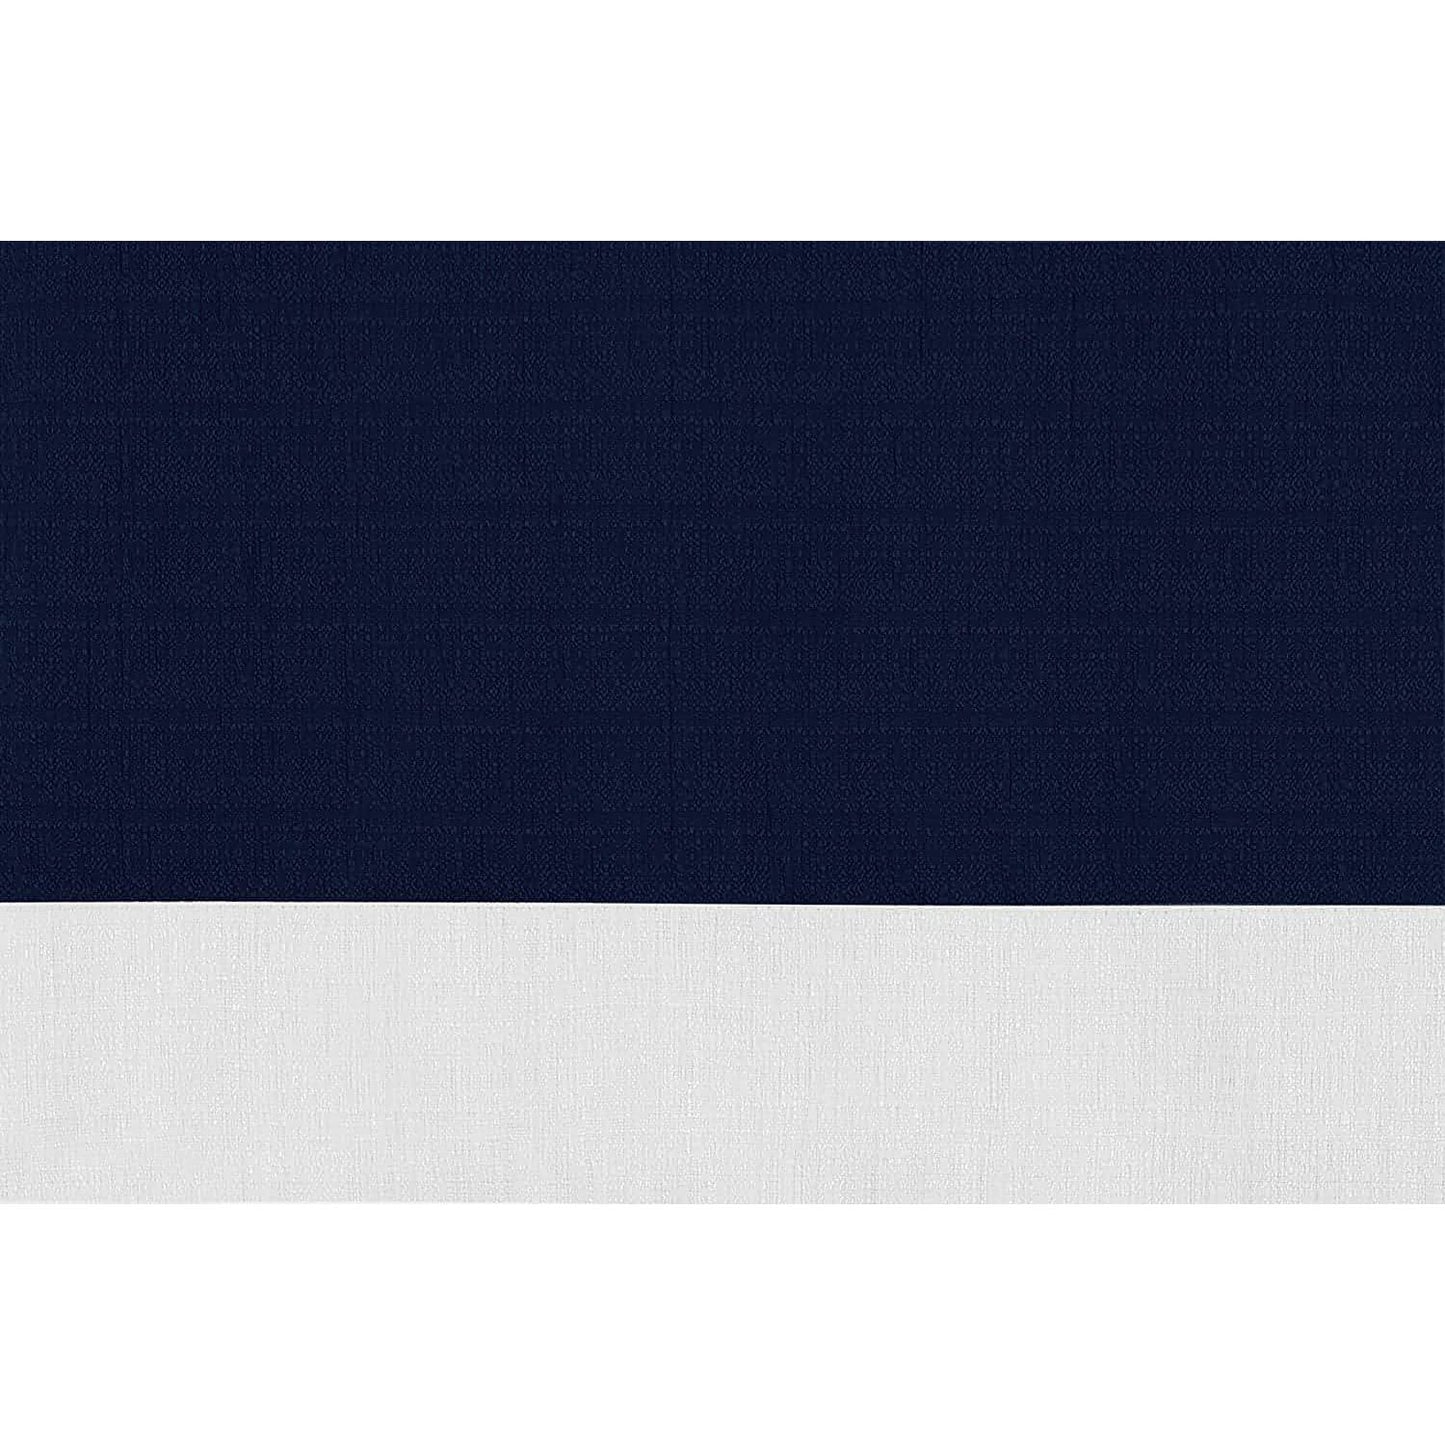 Achim-Achim Darcy Rod Pocket Window Curtain One Panel (Navy/White) (214cm x 132cm) - Brandat Outlet